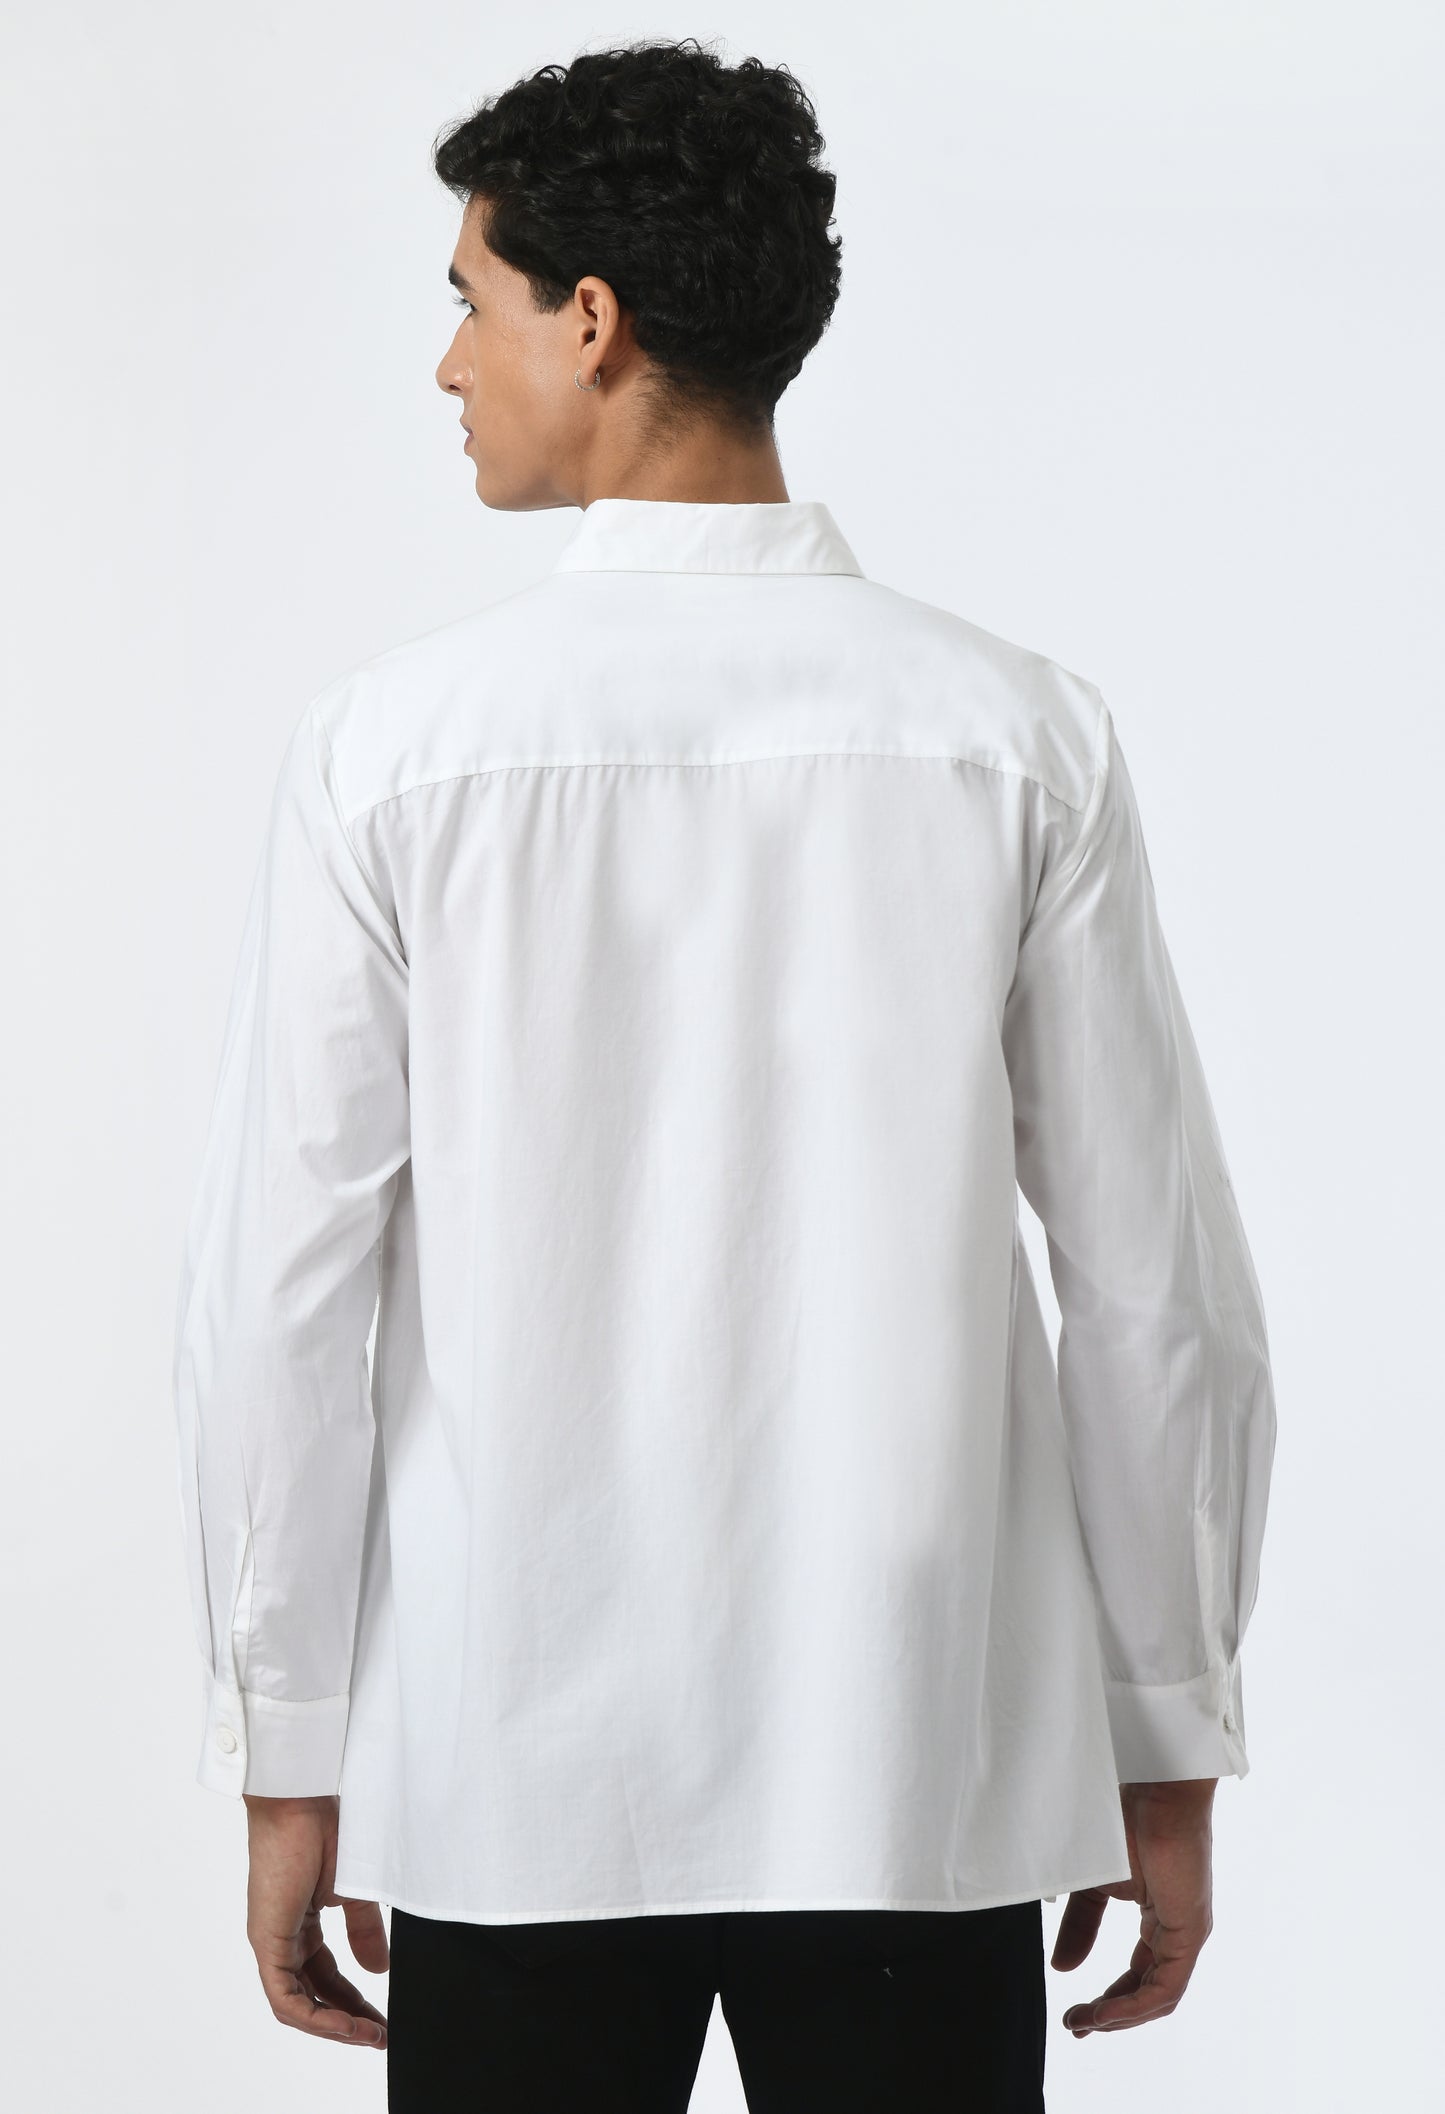 Unisex white cotton shirt.